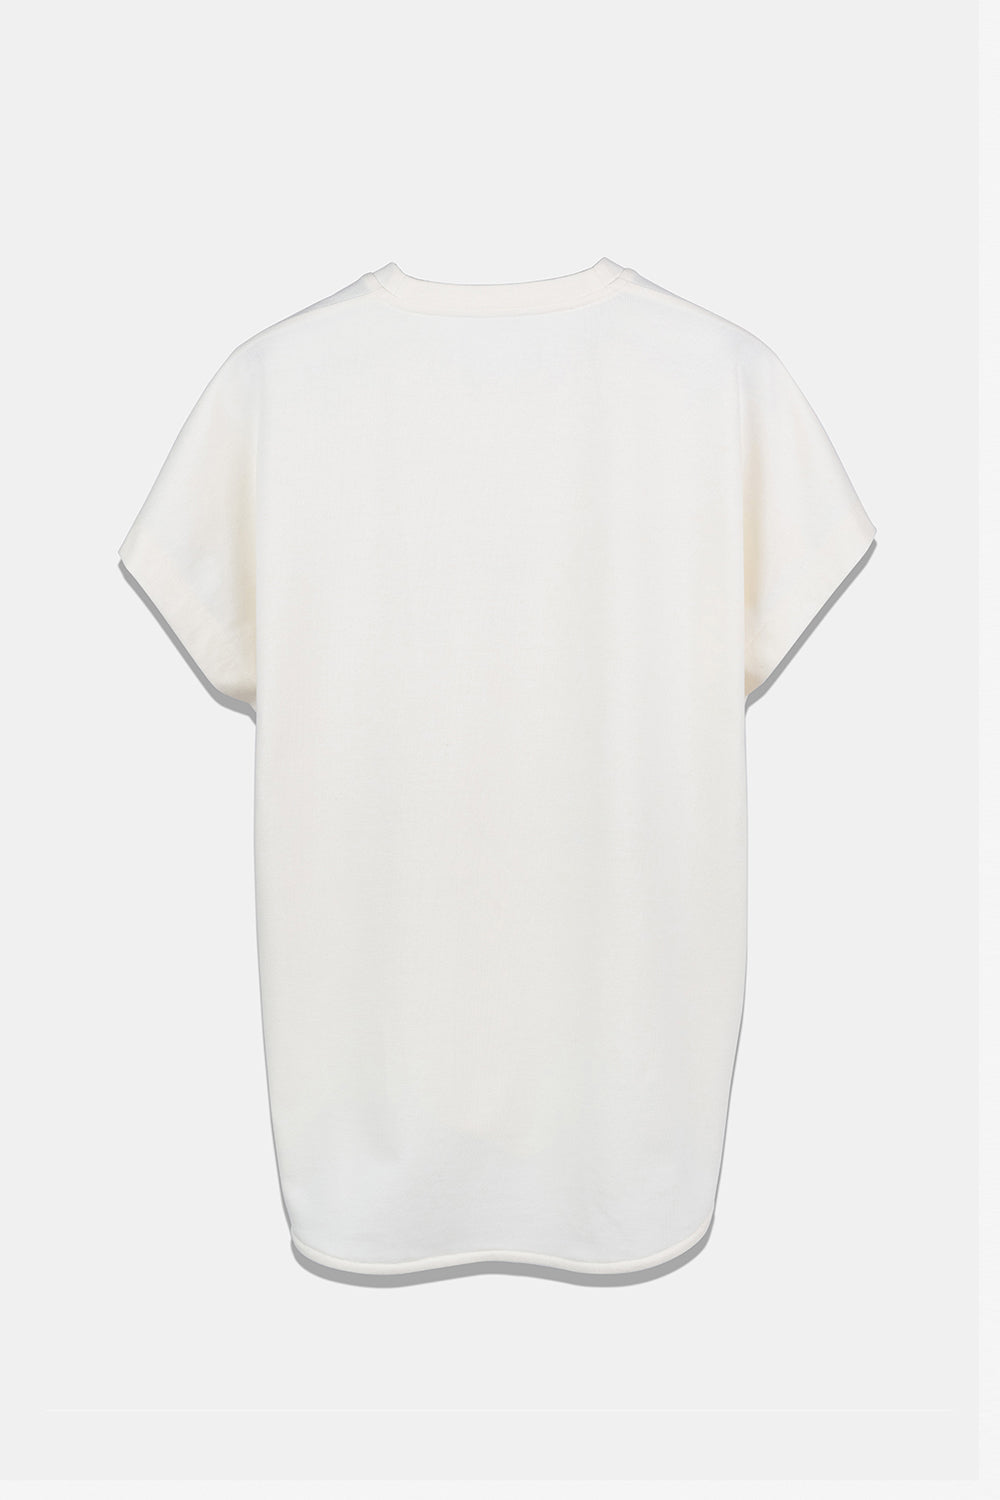 SEANNUNG - MEN - Raglan Sleeve T-Shirt 落肩連袖T恤